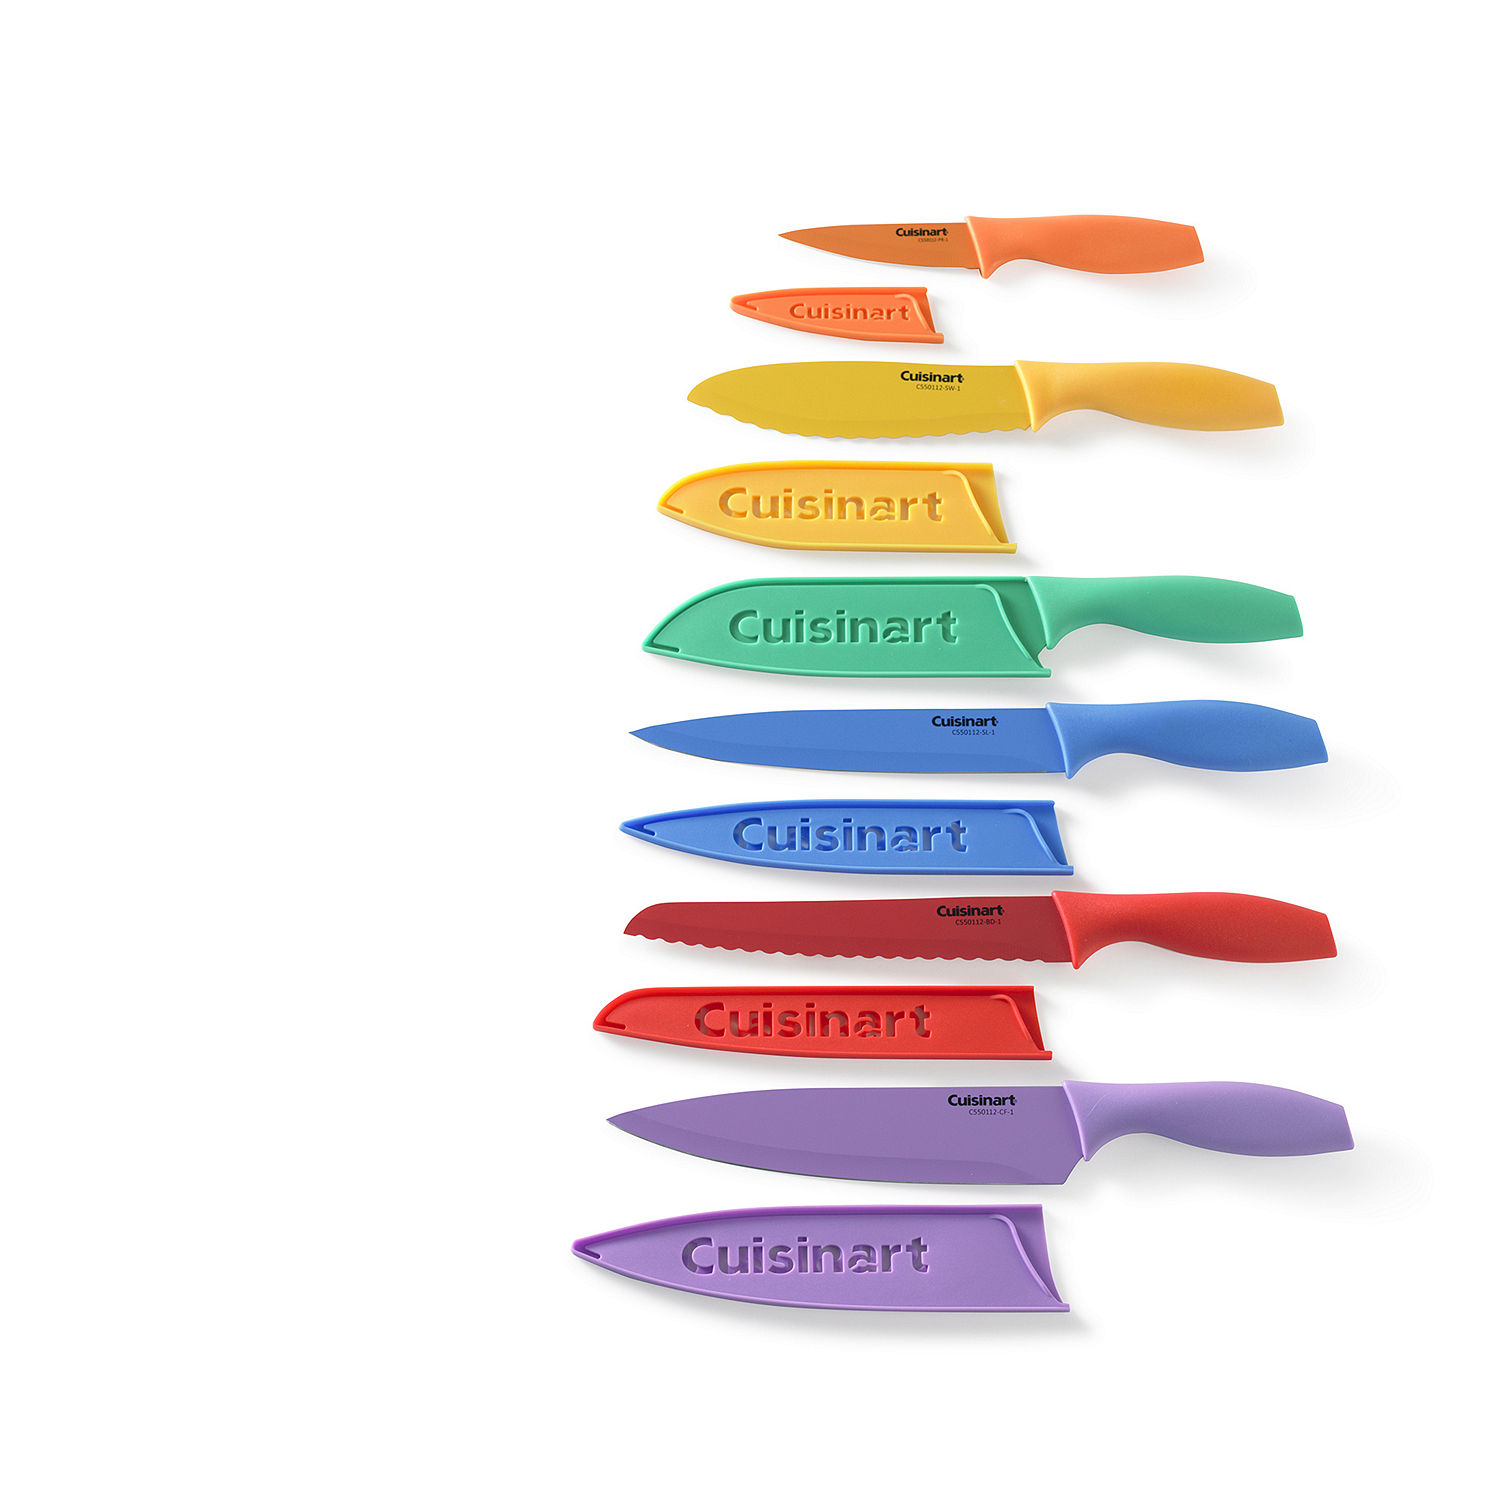 cuisinart-advantage-12-pc-colored-knife-set-color-multi-jcpenney